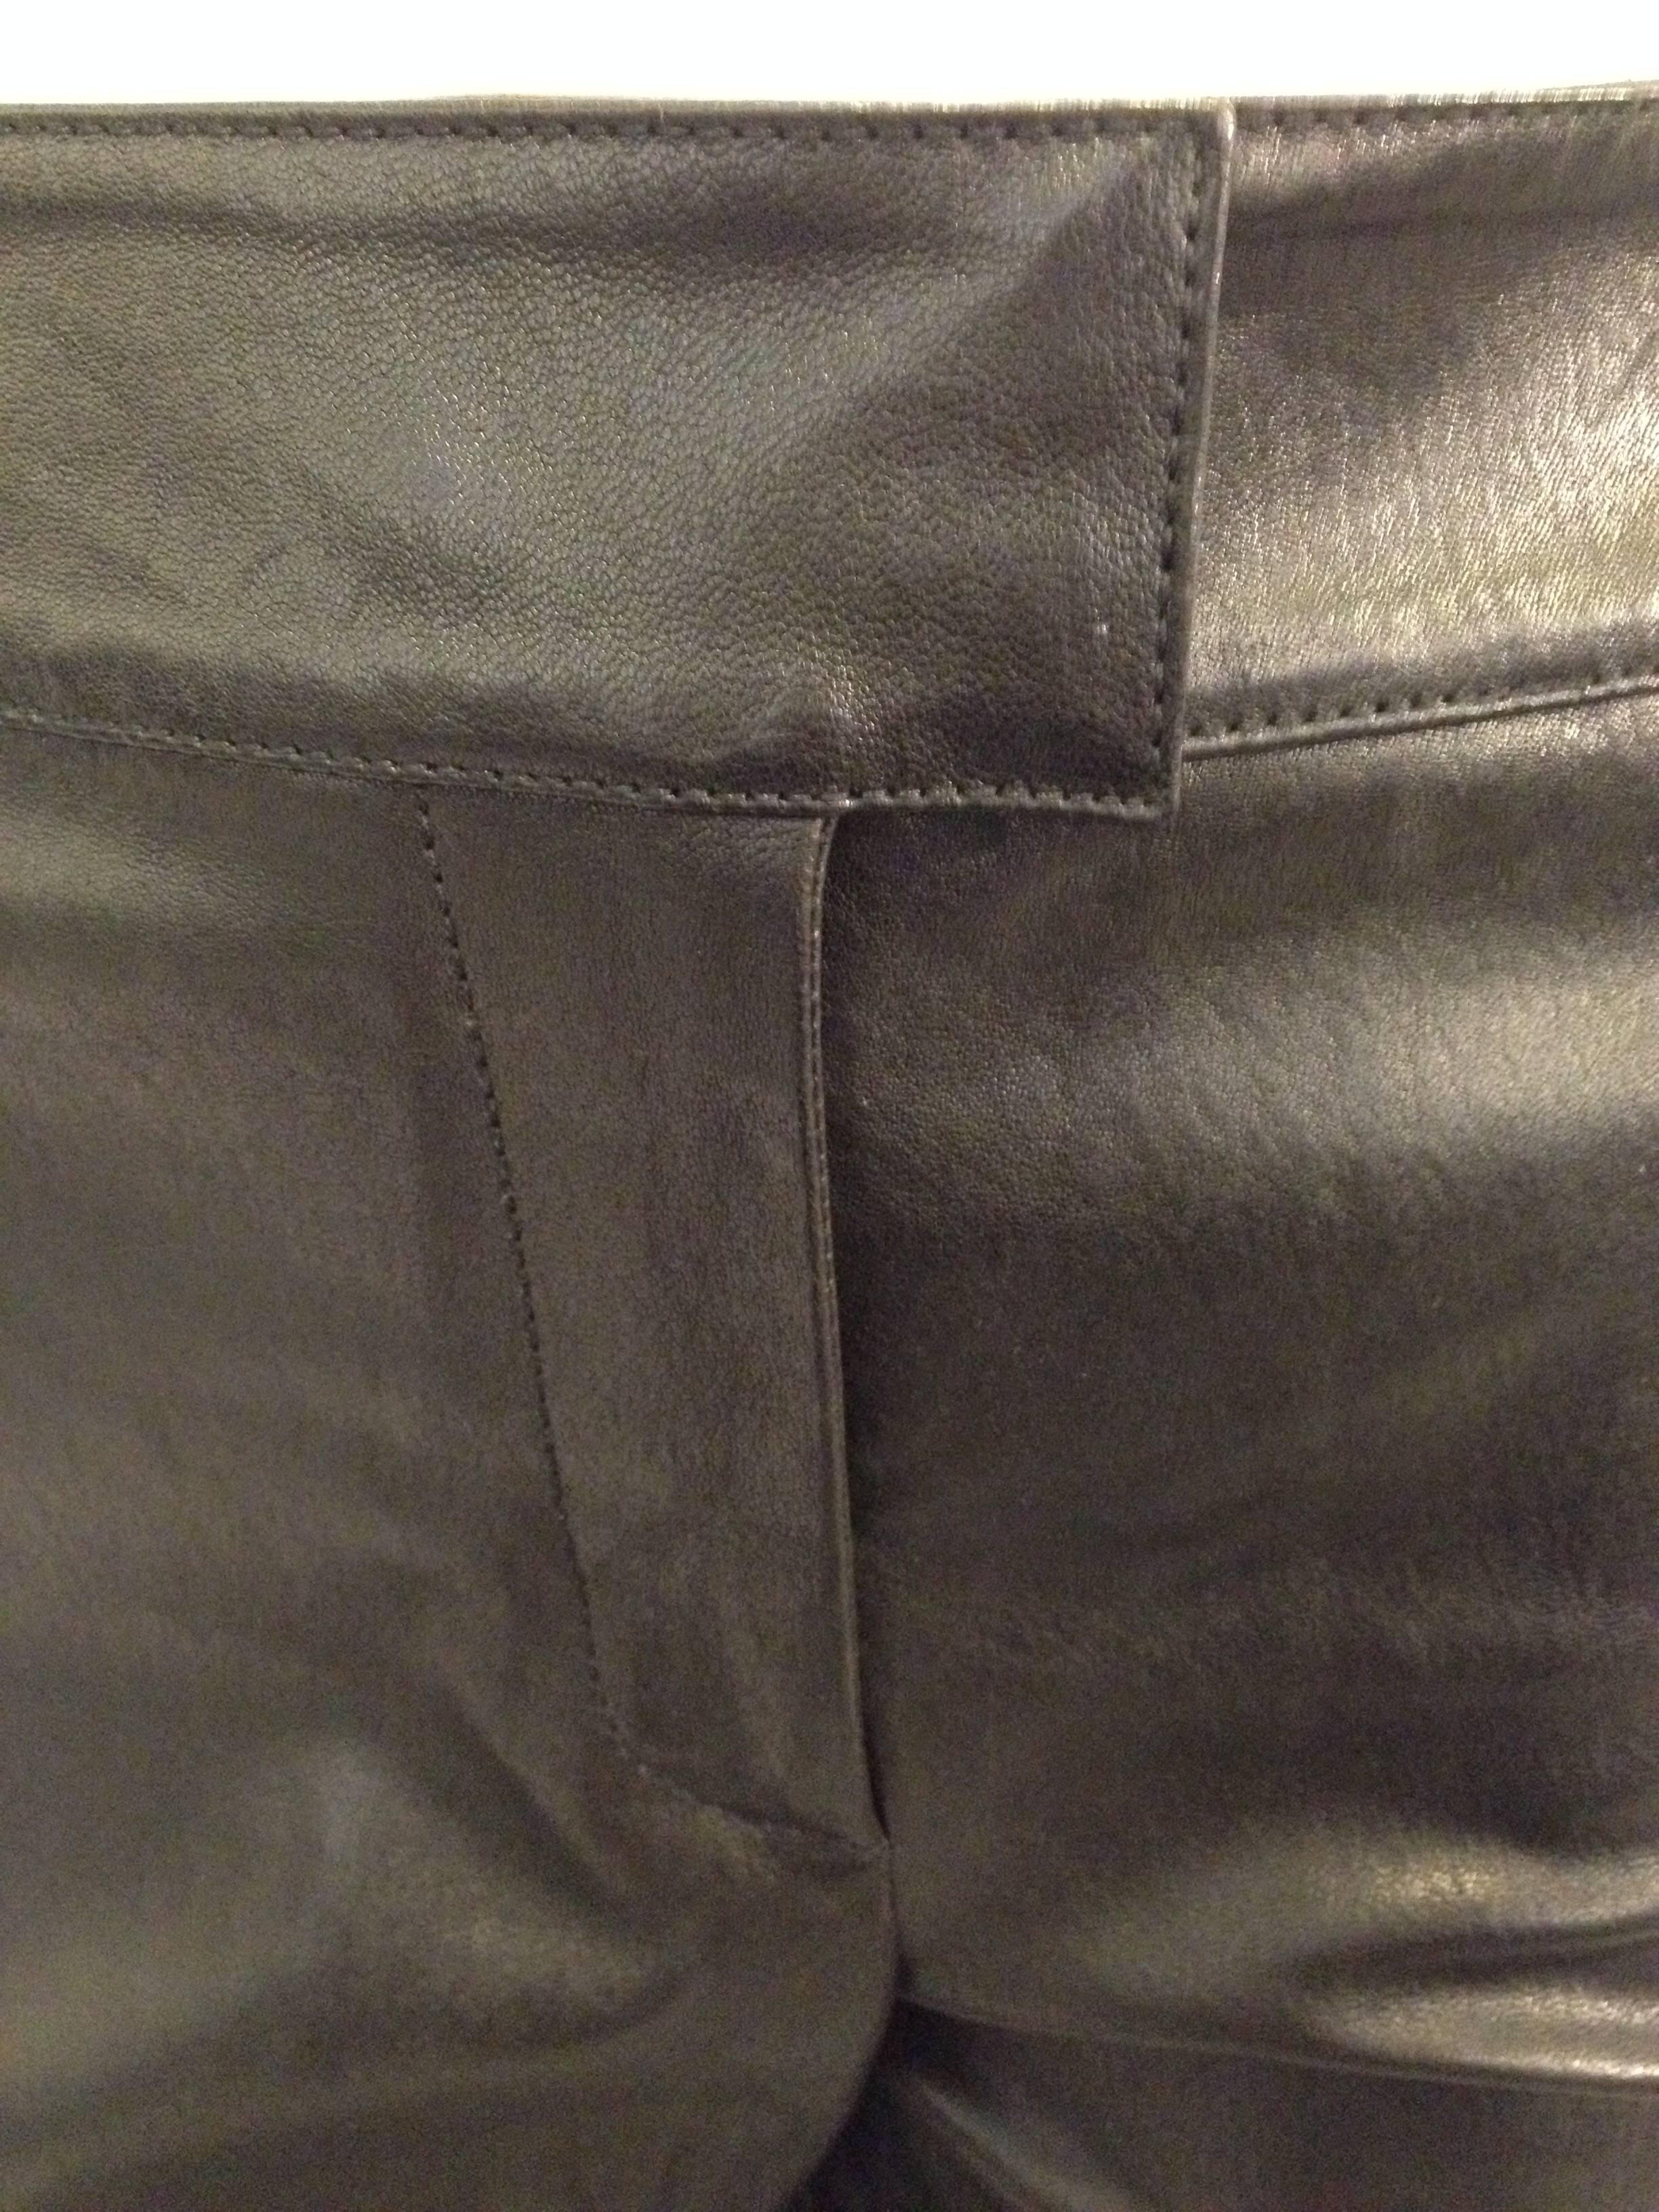 Givenchy Black Leather Pants Size 38 (6) 2